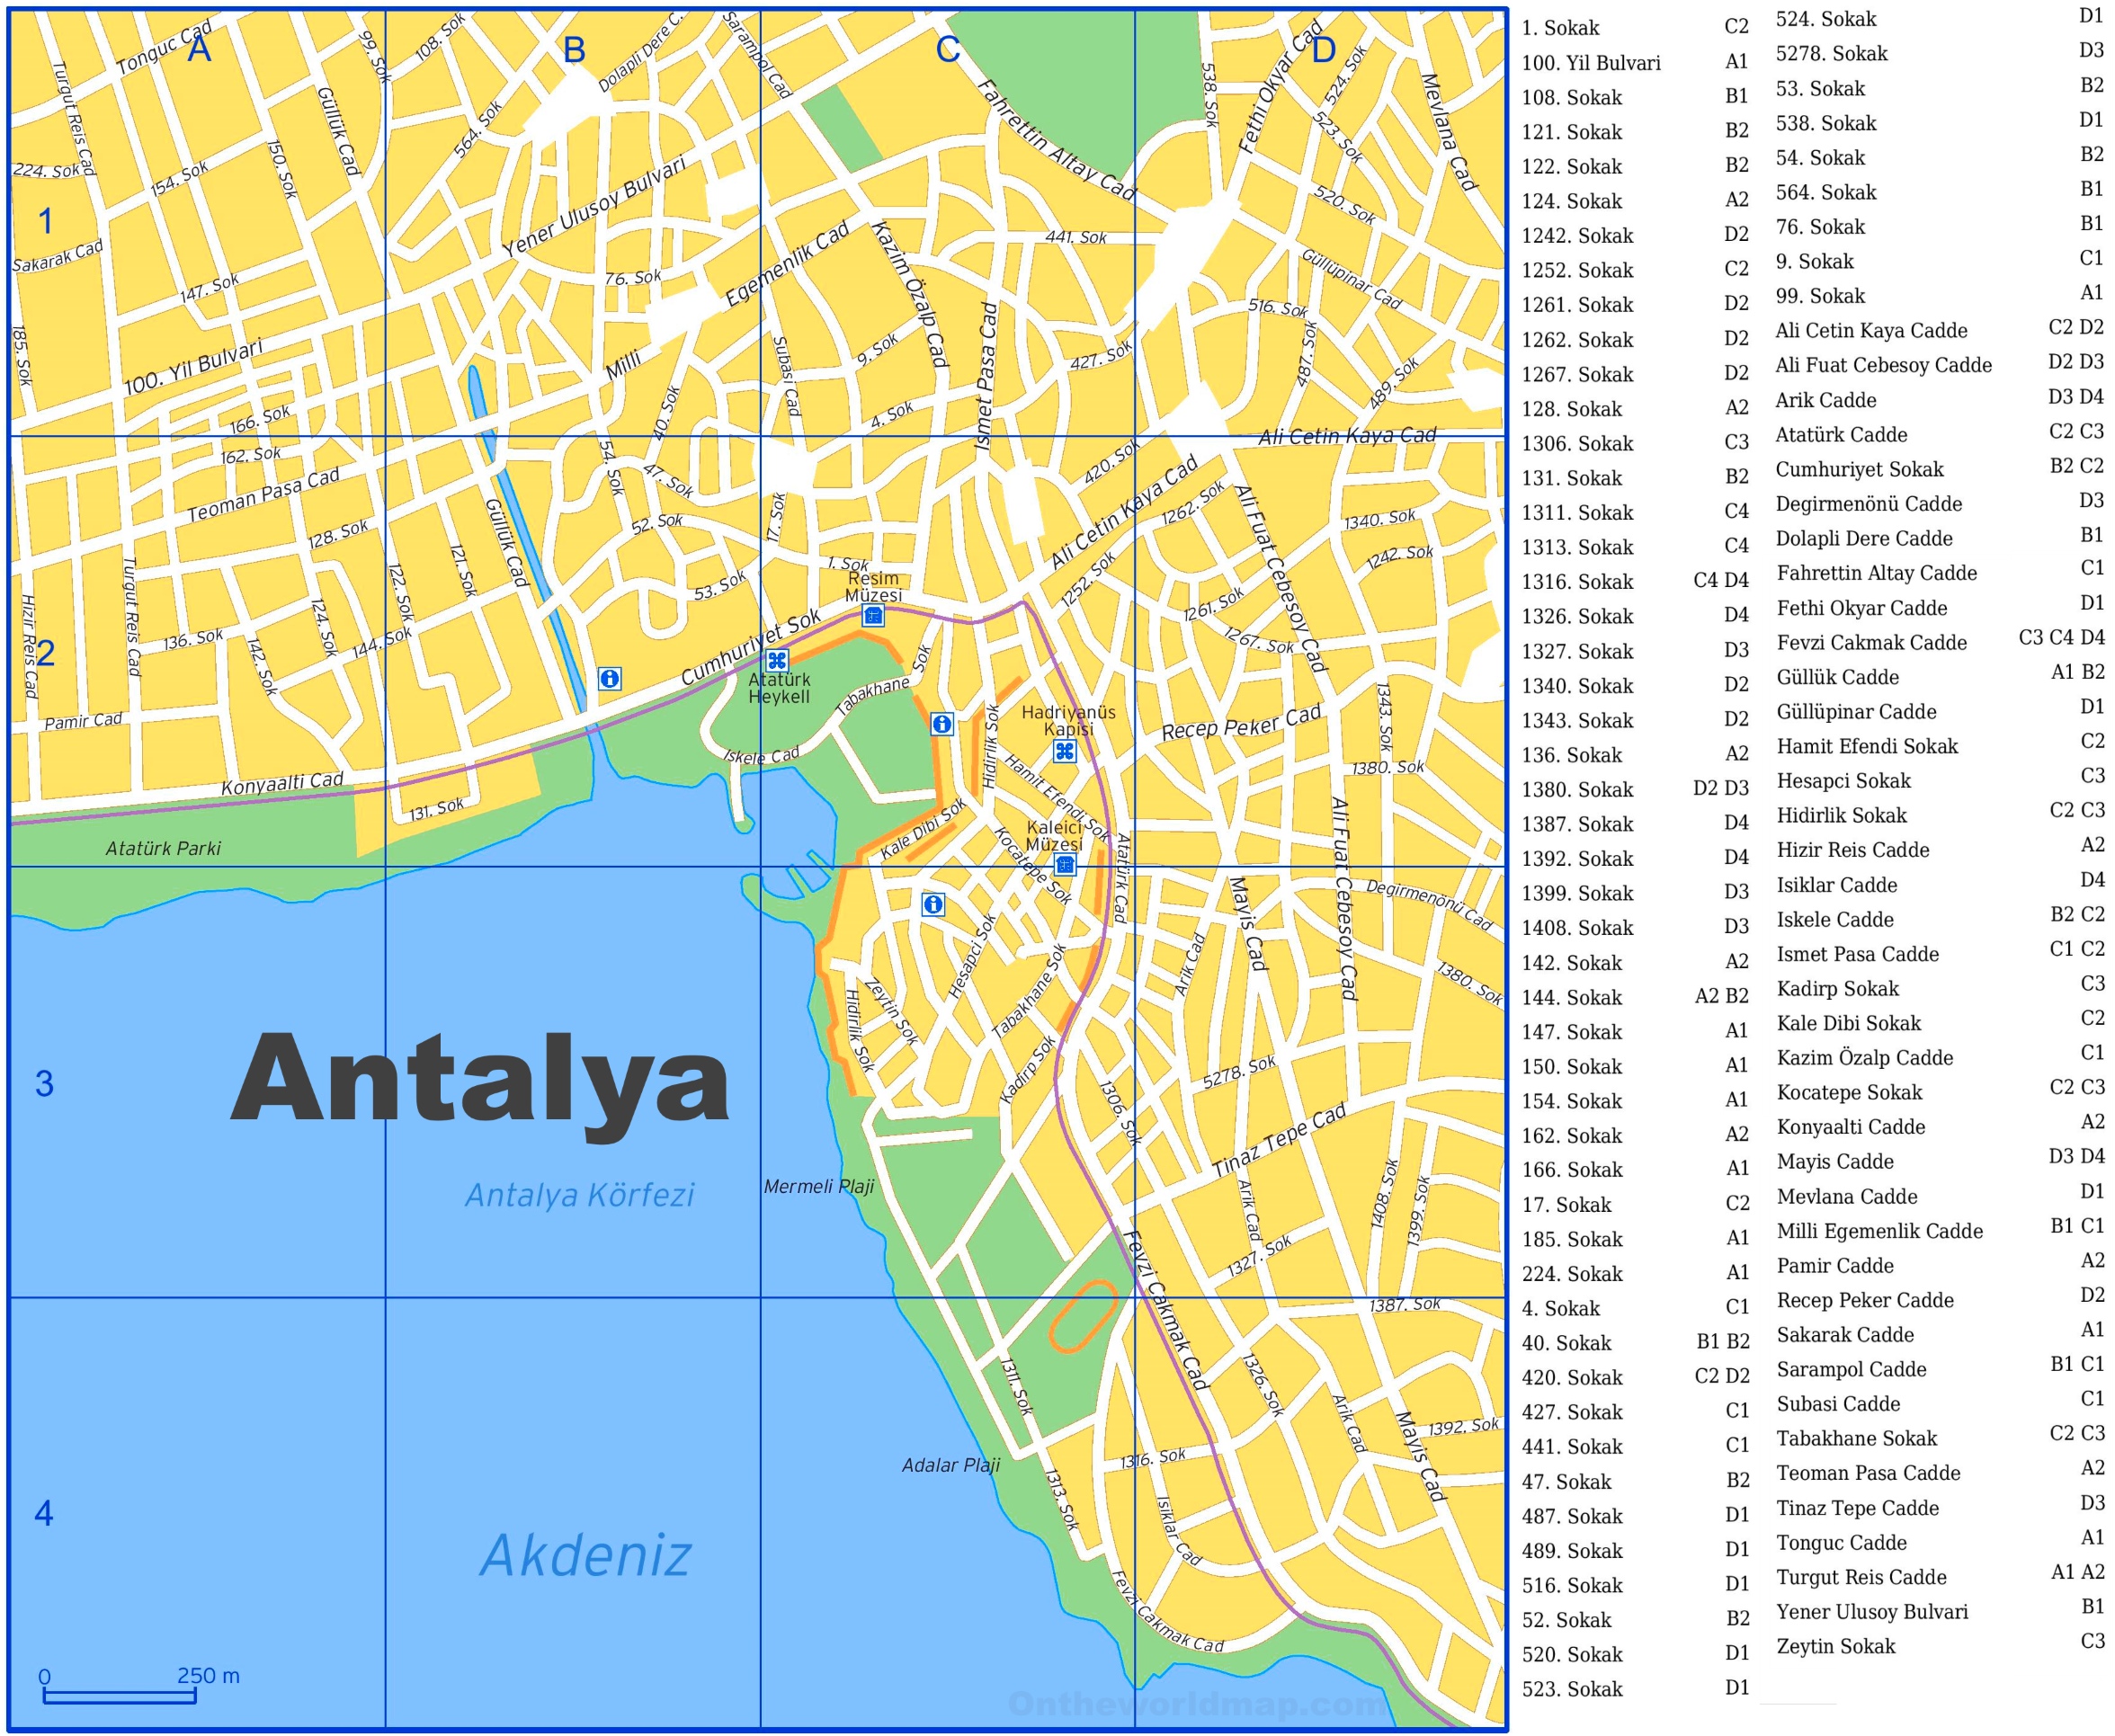 Antalya city center map